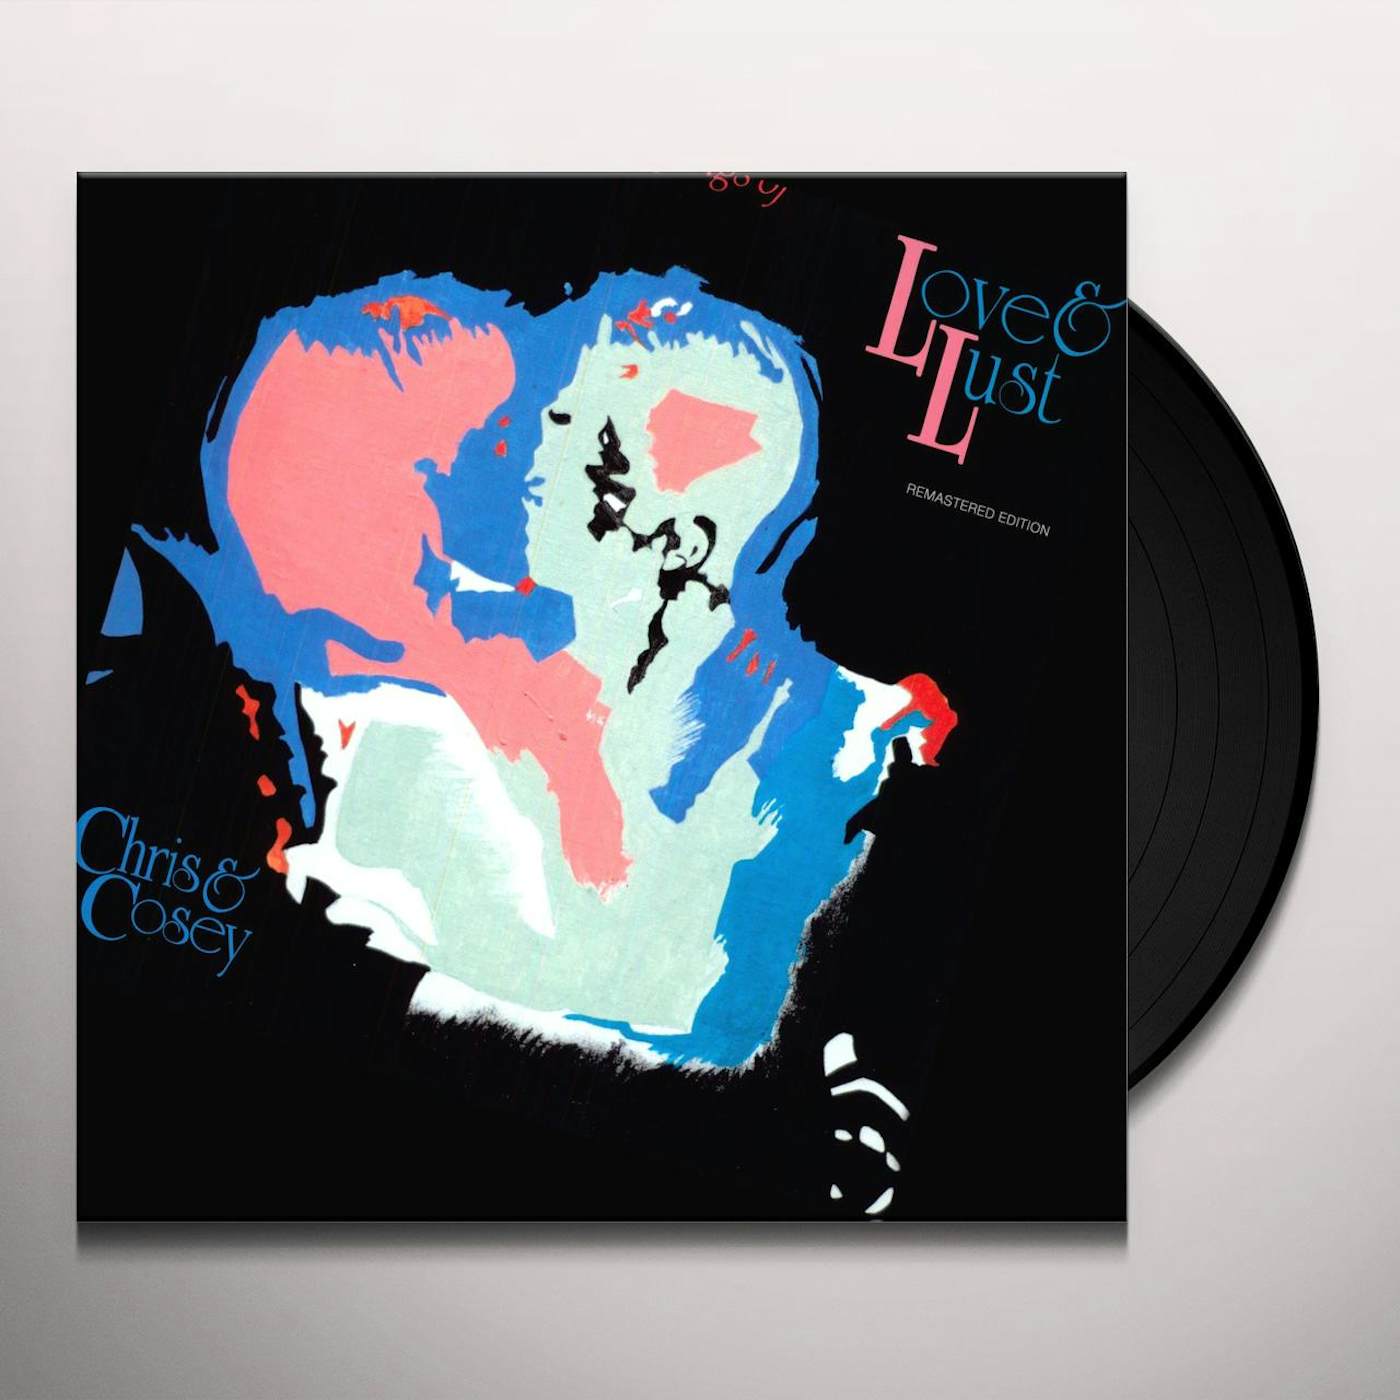 Chris & Cosey Songs of Love & Lust Vinyl Record